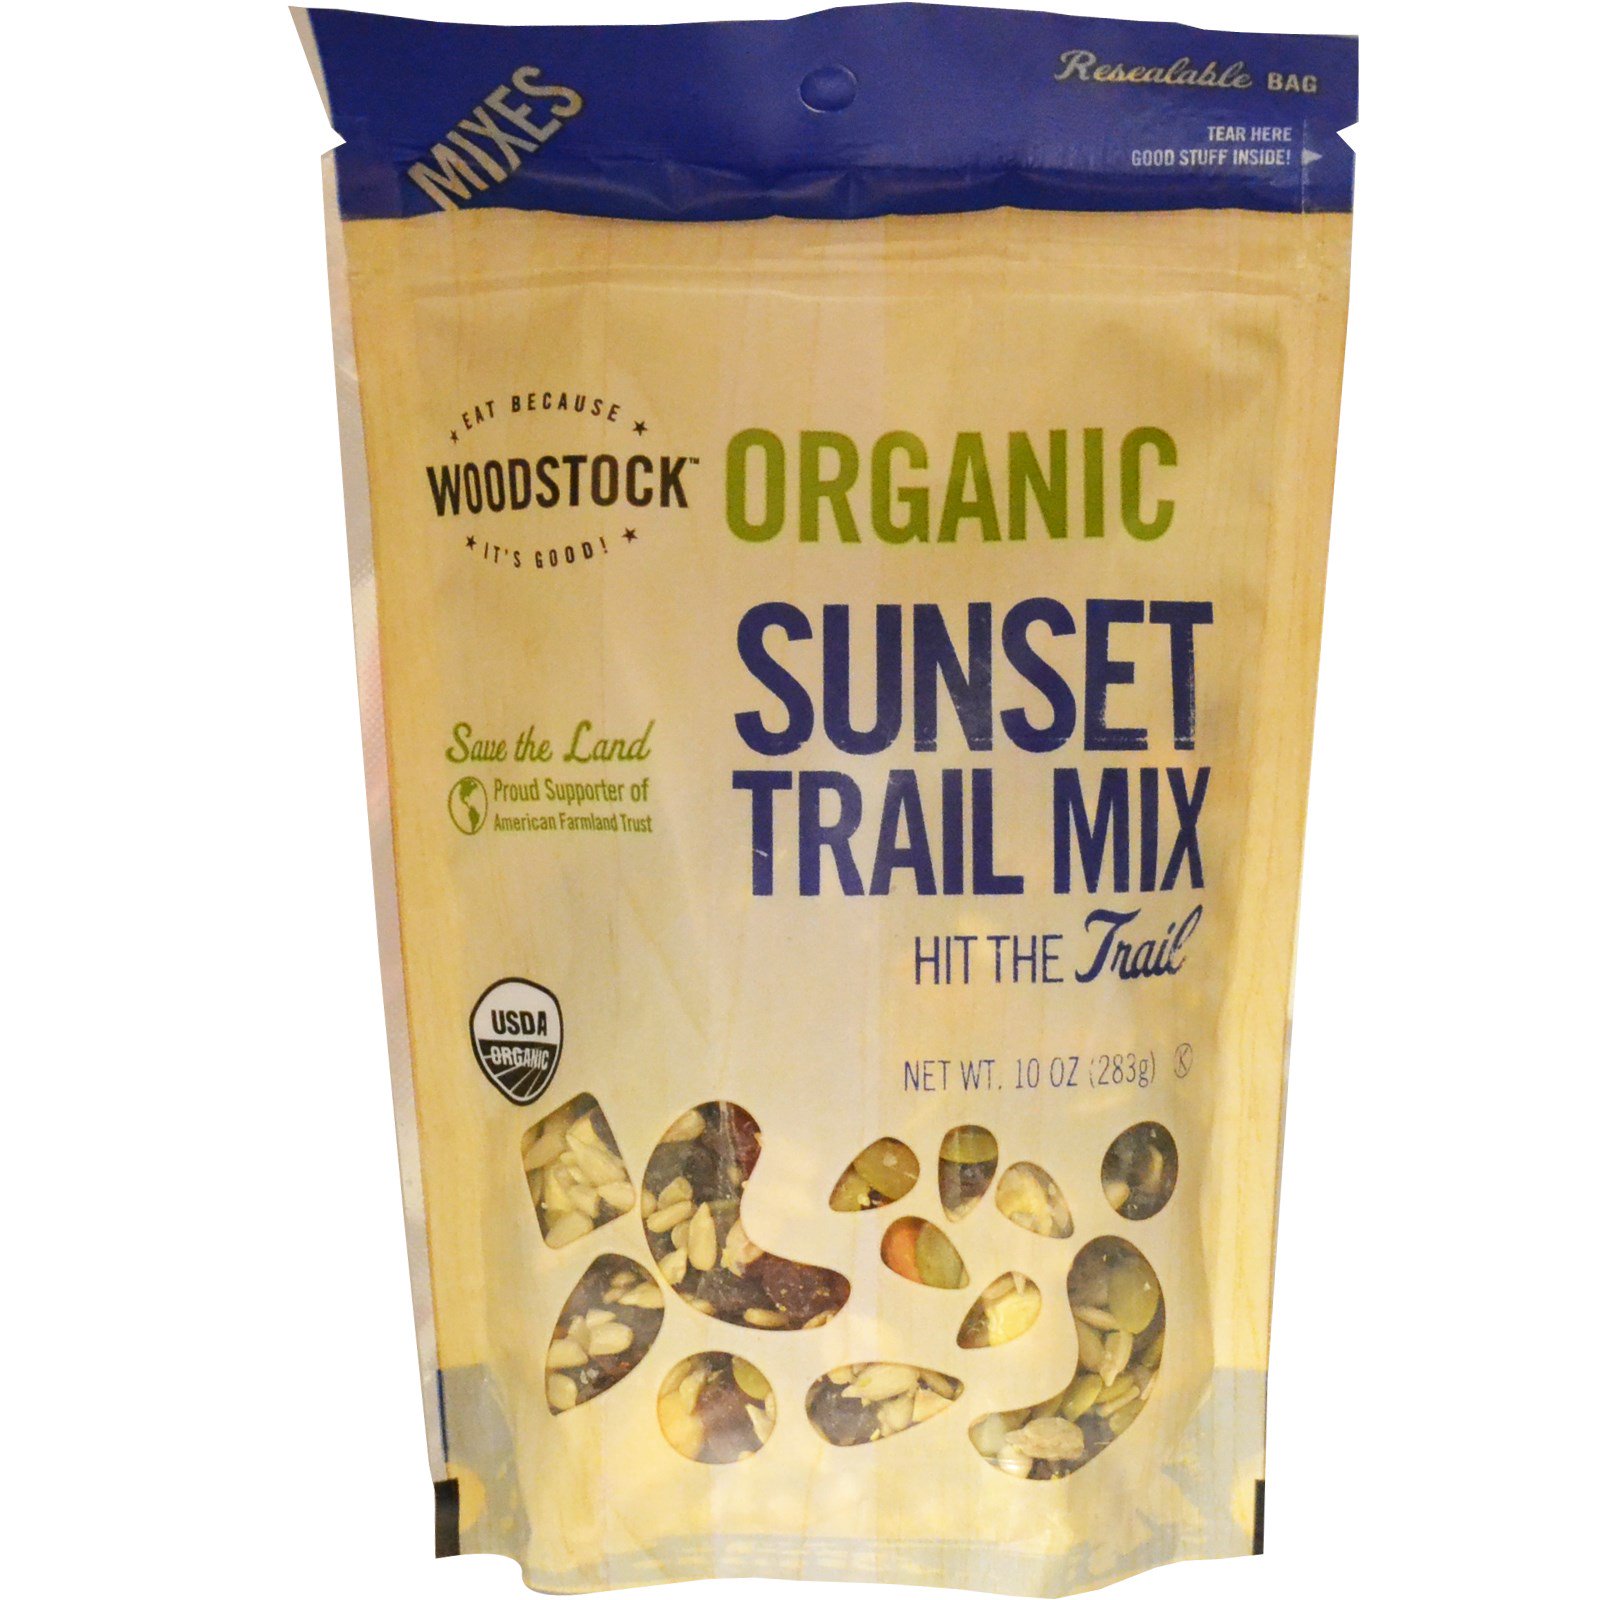 Woodstock, Organic, Sunset Trail Mix, 10 oz (283 g) - iHerb.com